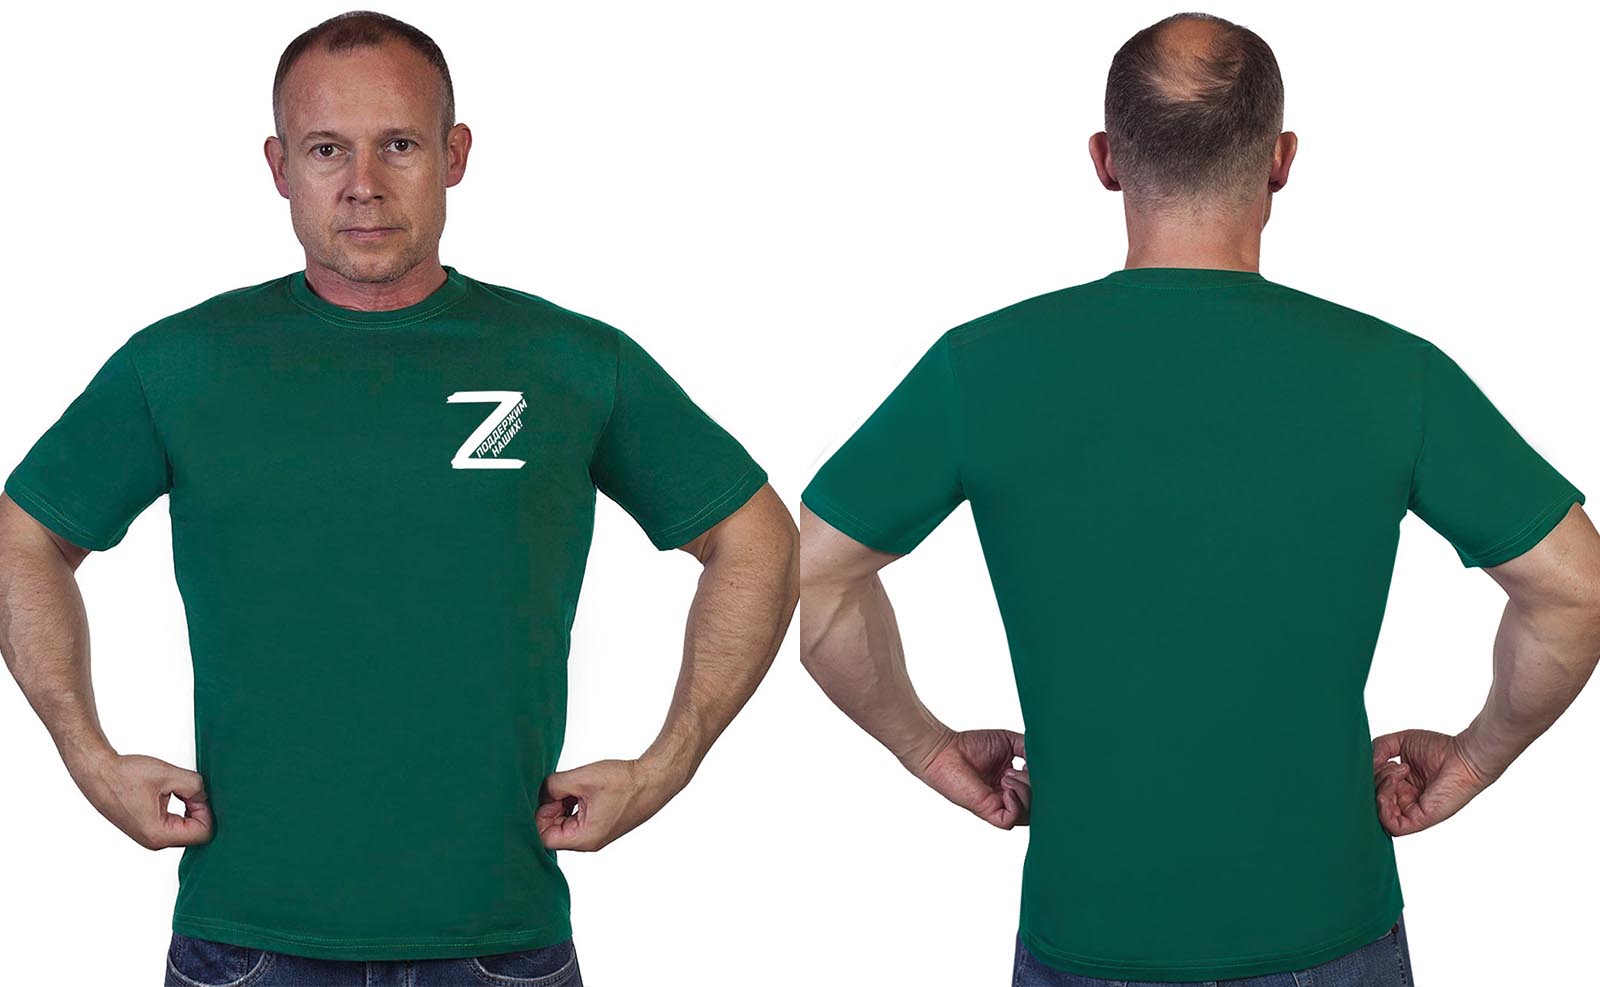 Купить футболку со знаком «Z»